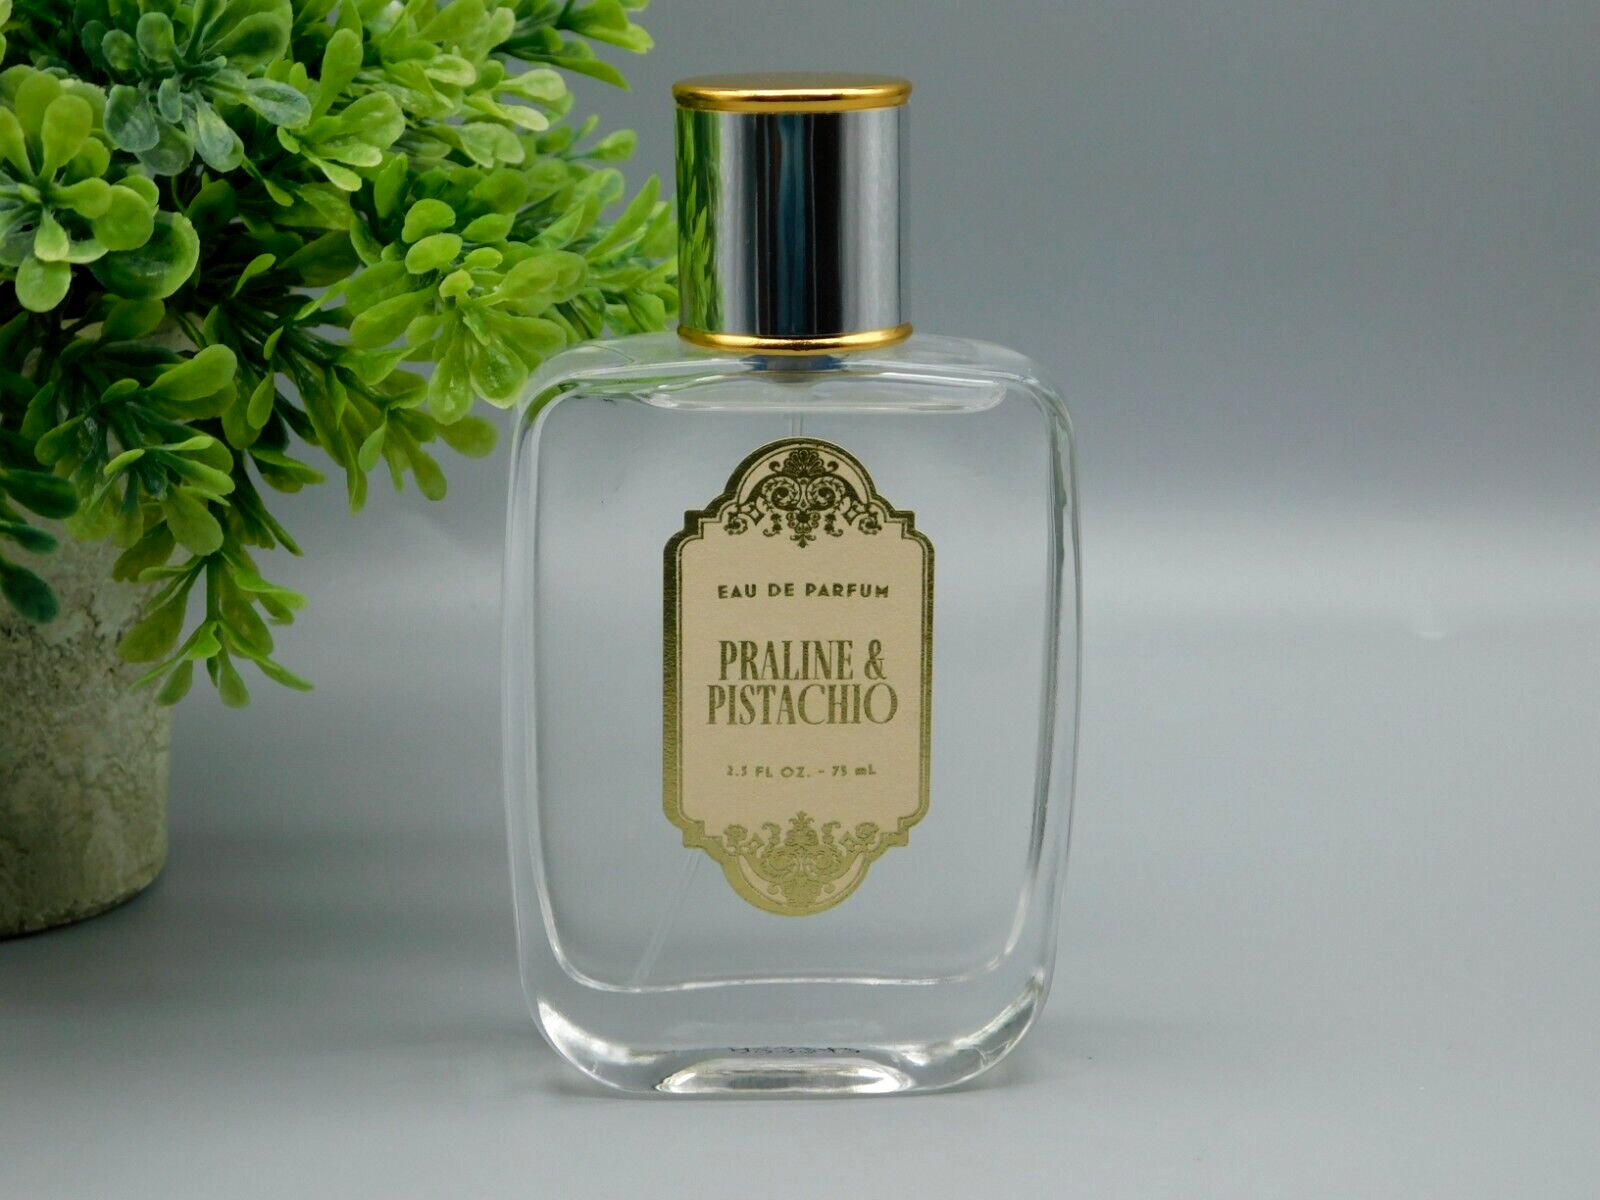 Tru Fragrance Praline & Pistachio Eau de Parfum Spray 3.4 oz New Without Box